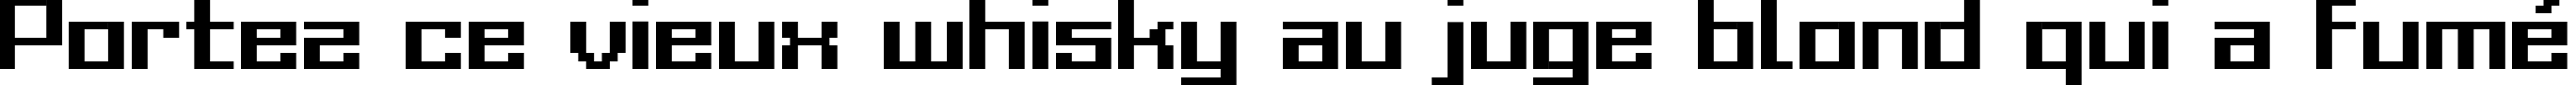 Пример написания шрифтом Grixel Acme 9 Regular Bold текста на французском